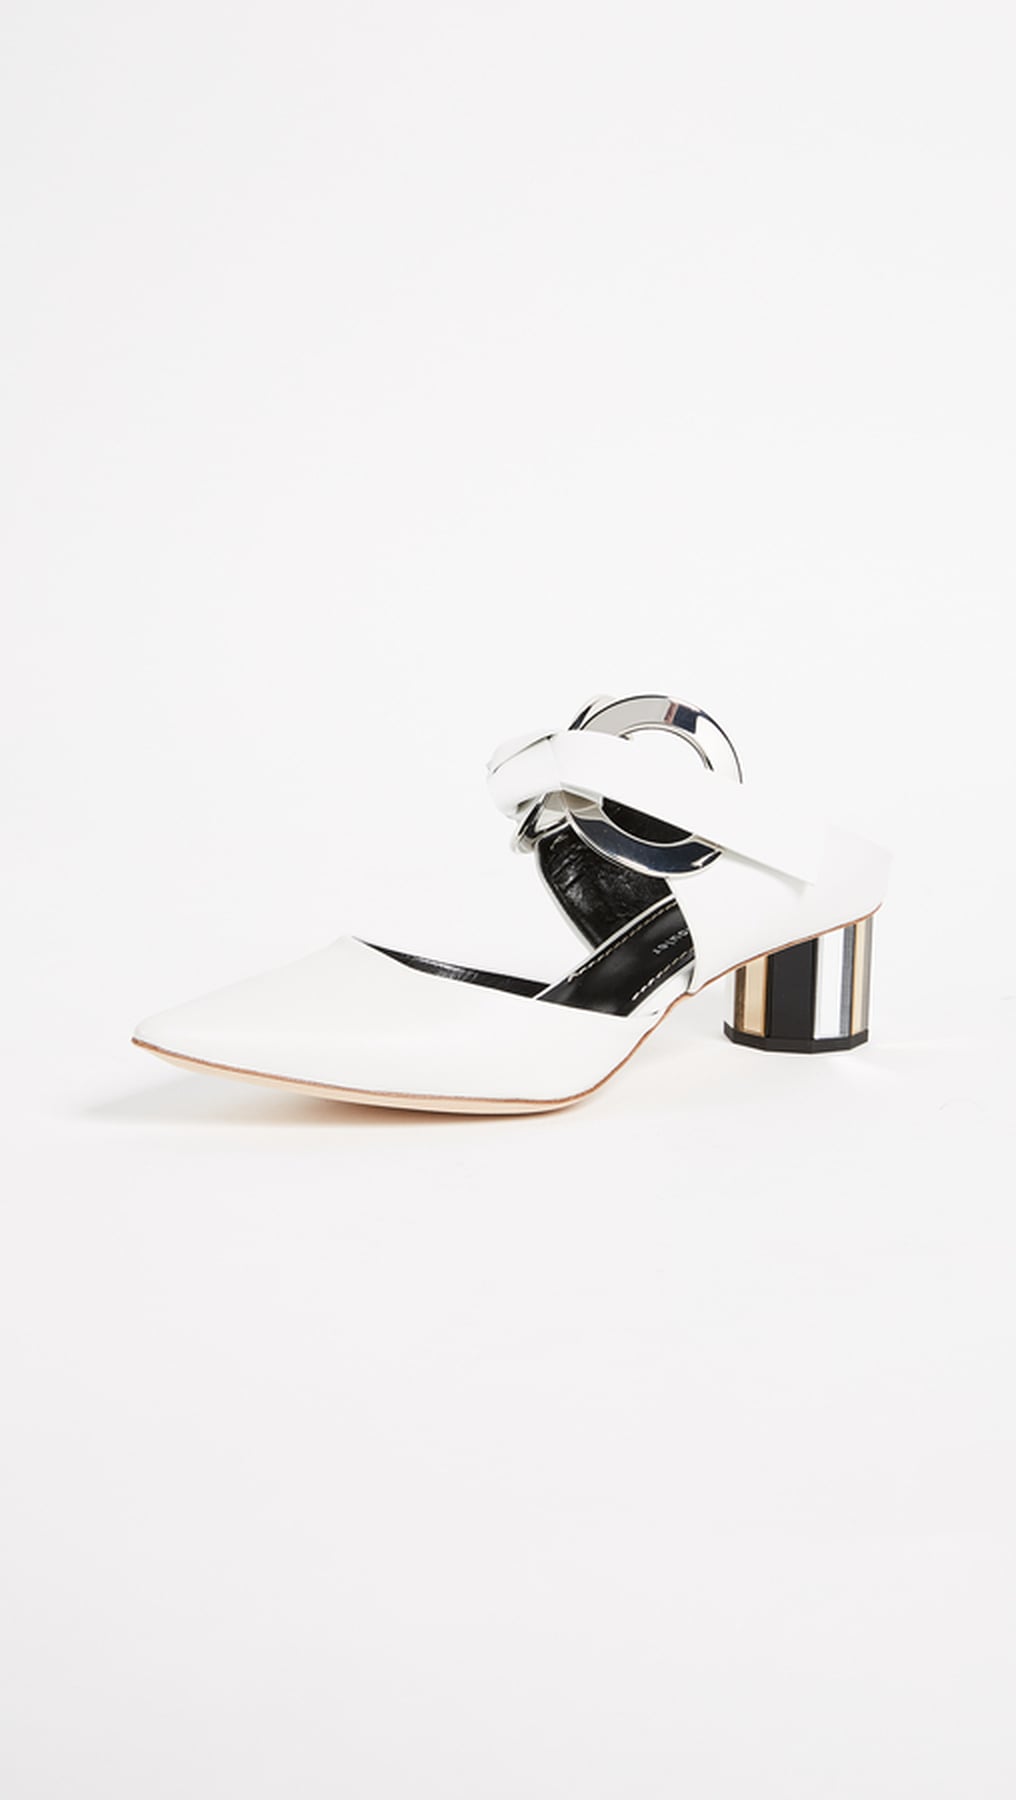 Kaia Gerber Wearing White Heels | POPSUGAR Fashion